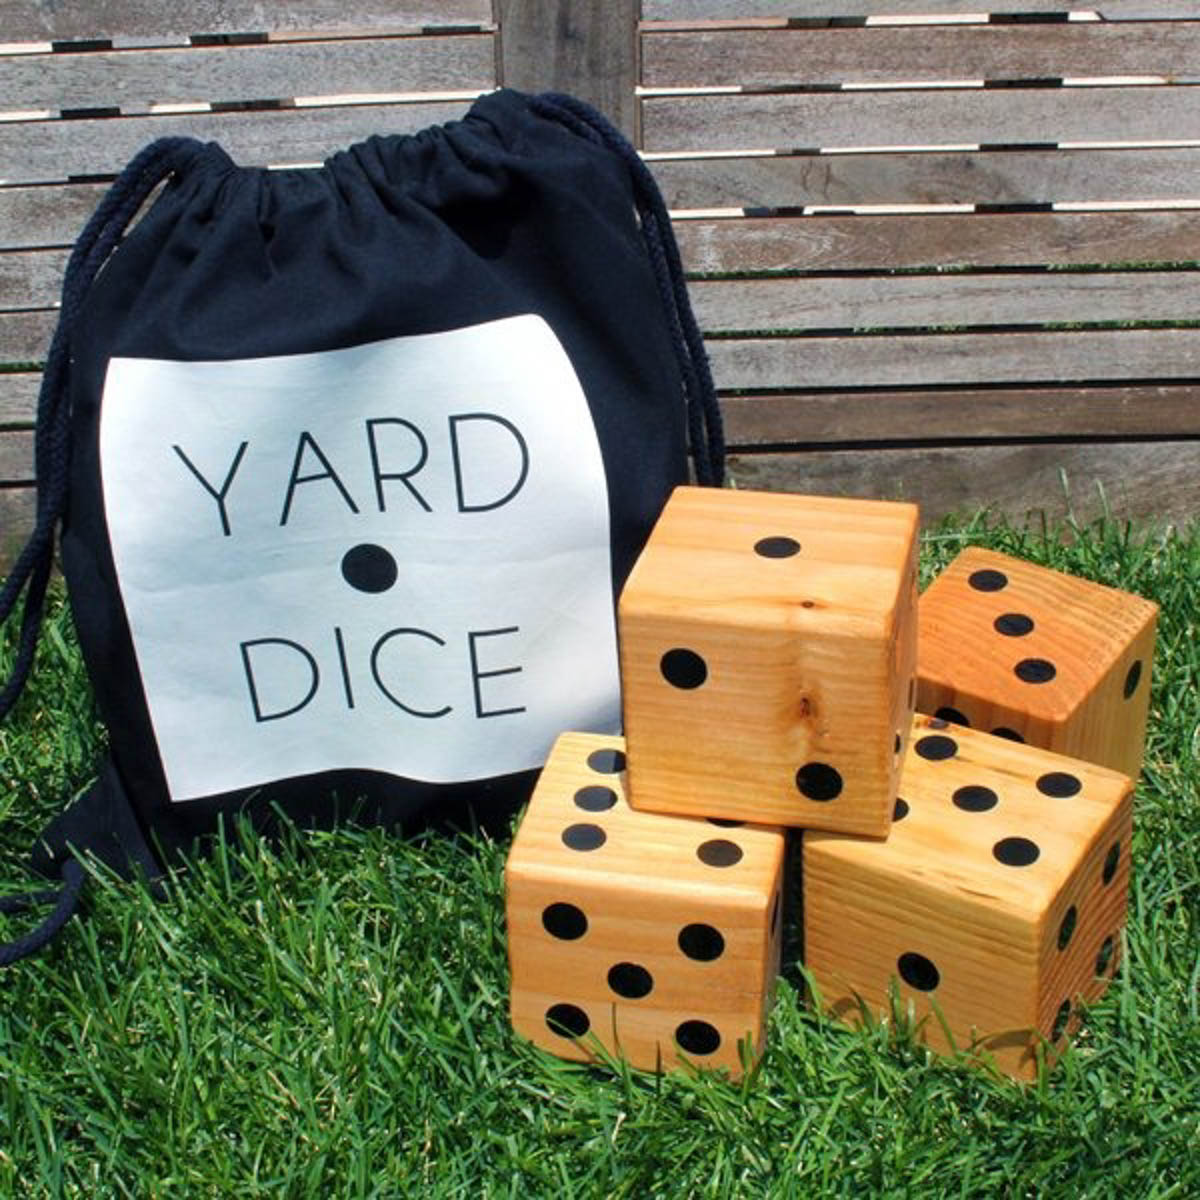 wooden yard dice sitting next to bag 